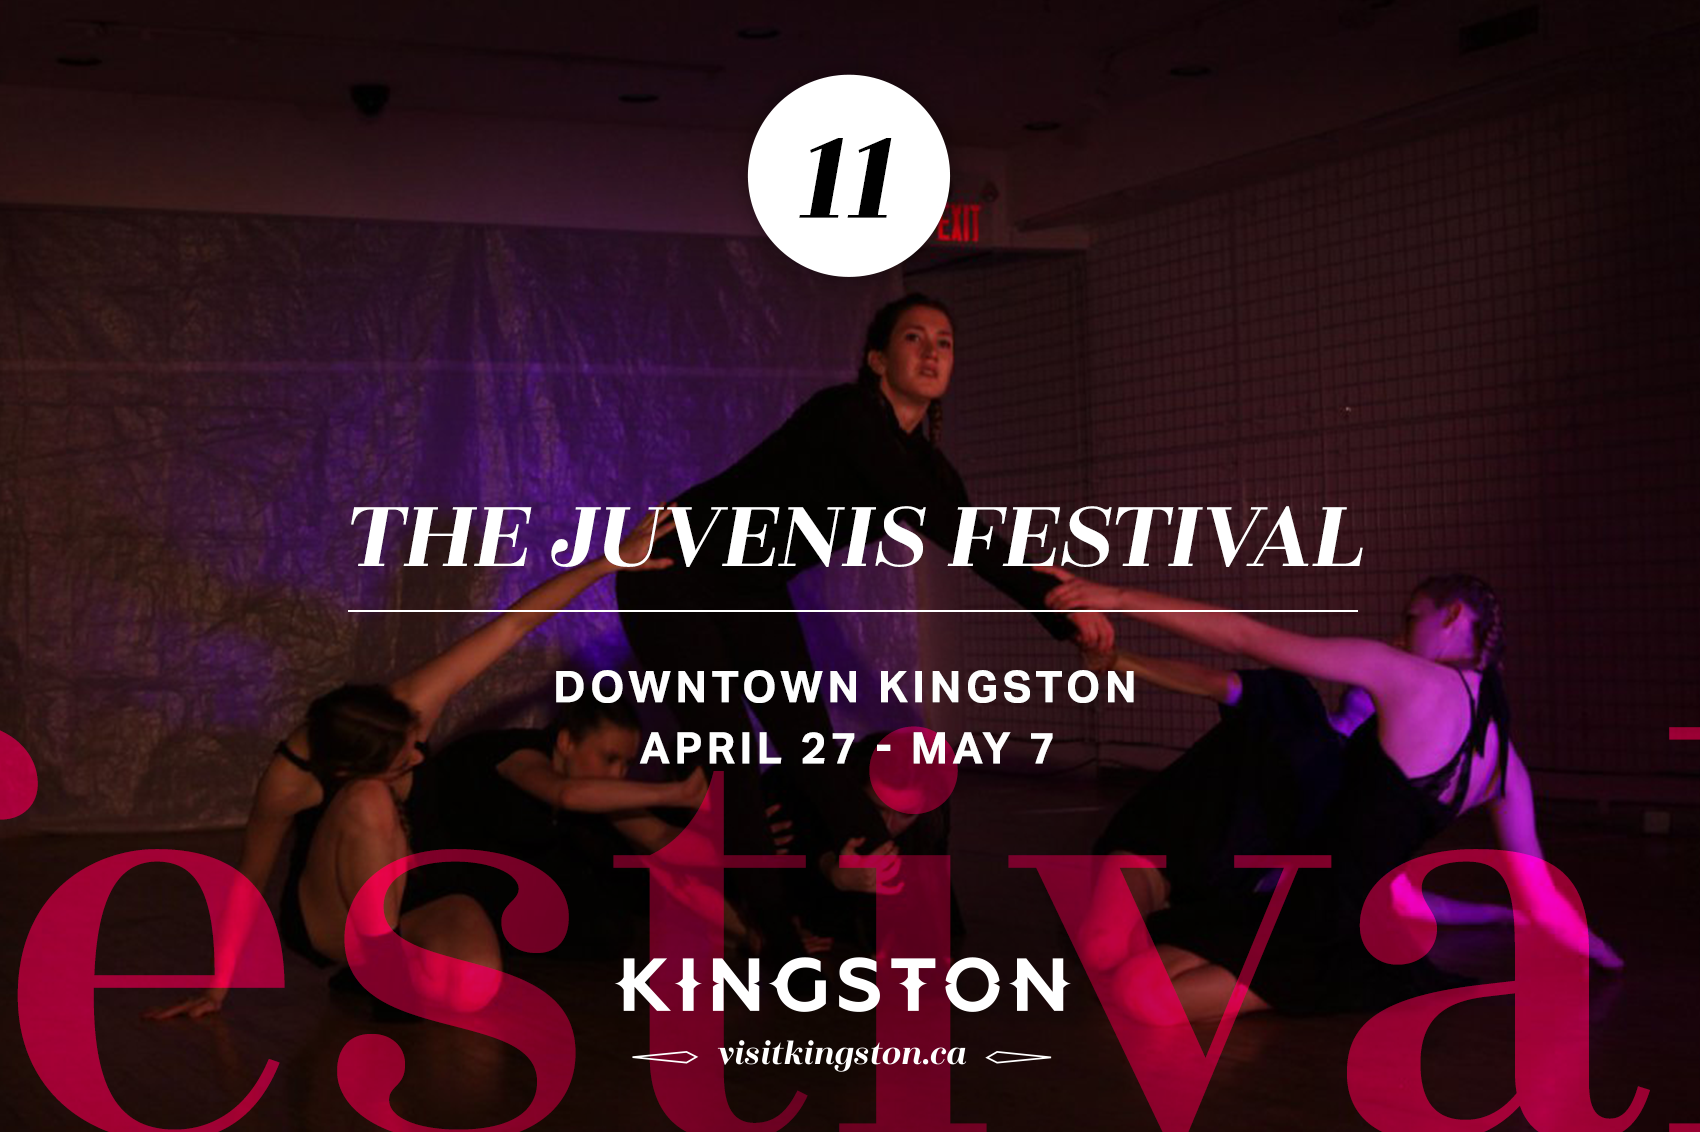 The Juvenis Festival